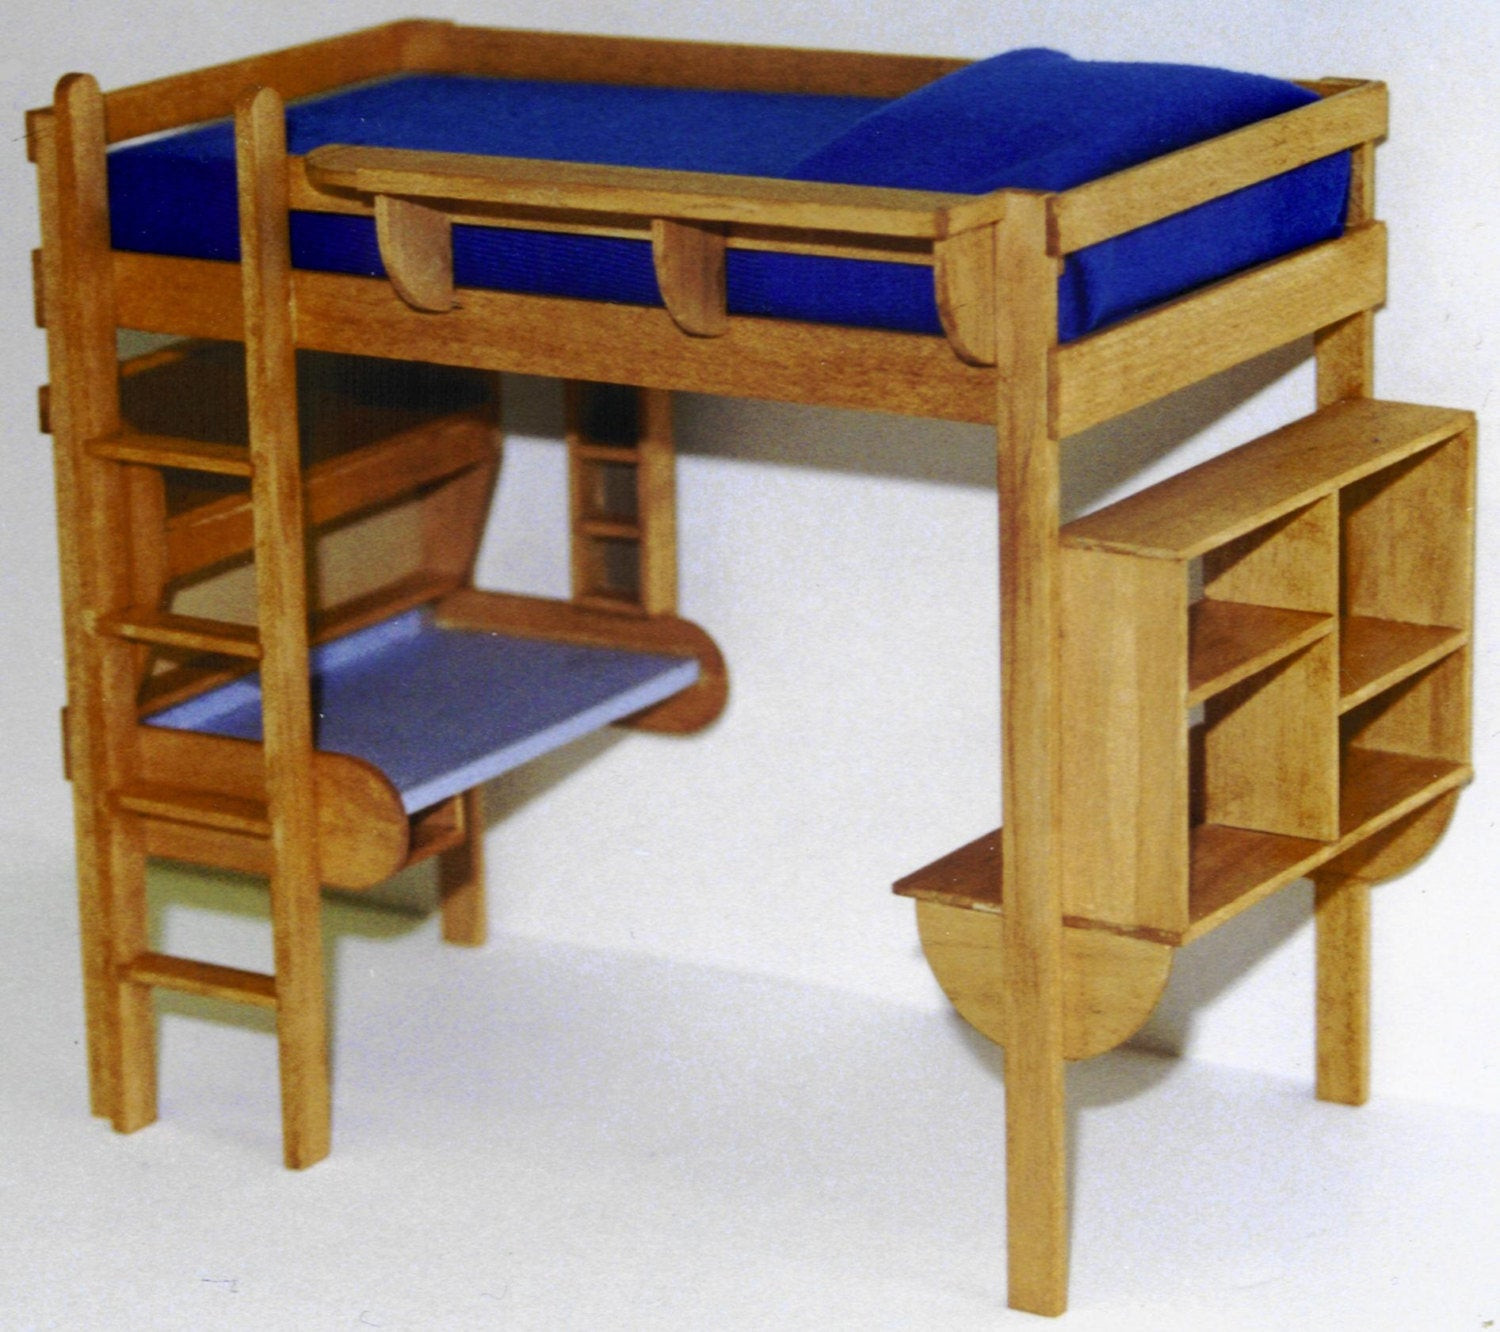 Kids Desk With Storage
 CHILDREN S LOFT BED with desk and storage woodworking